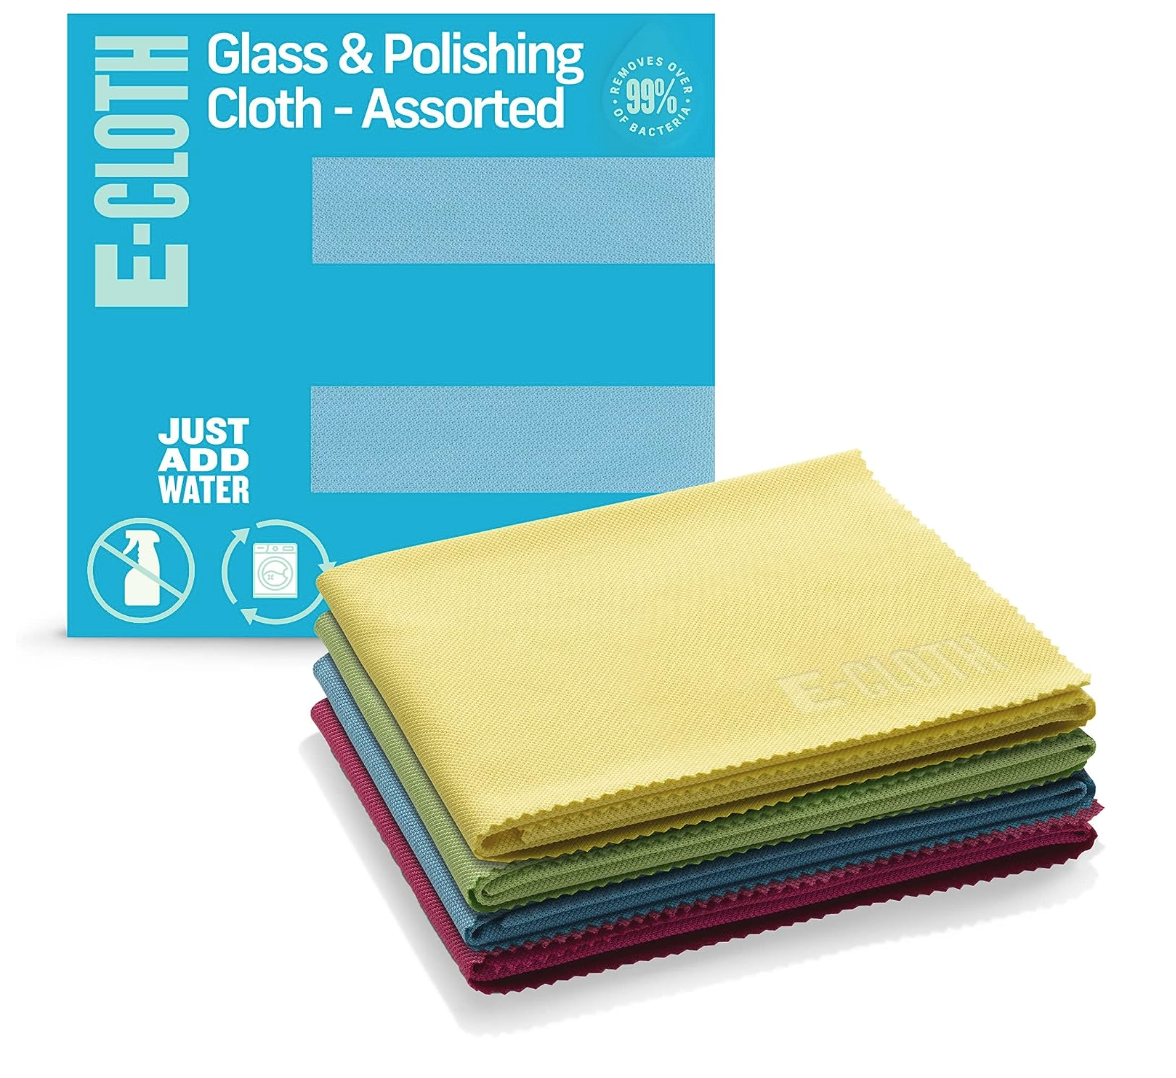 Four colorful glass polishing rags.